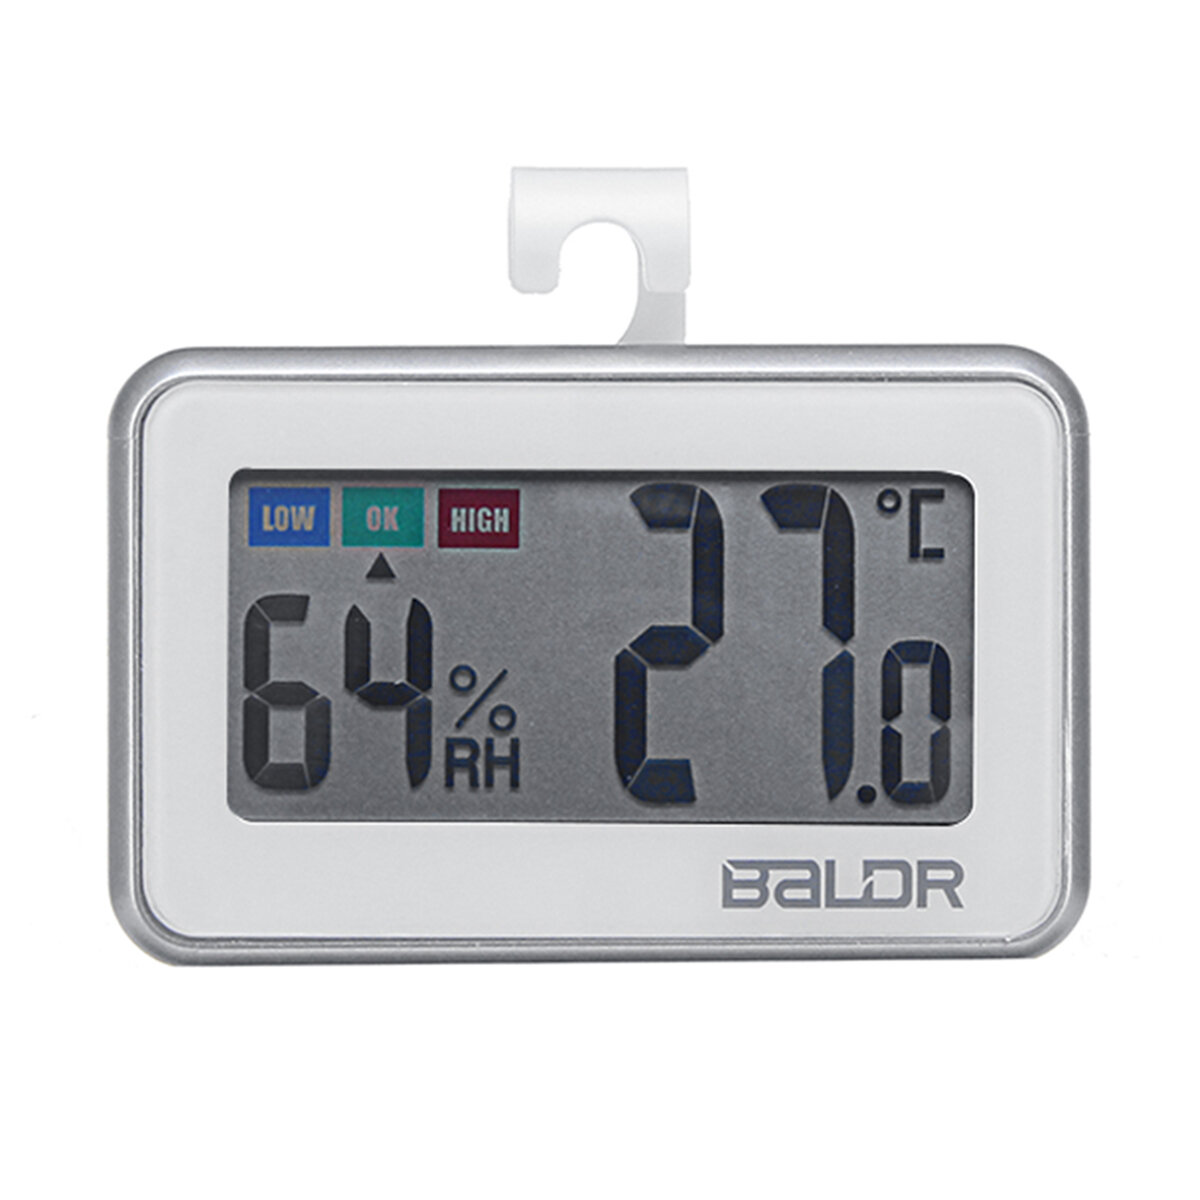 

Mini Digital Temperature Humidity Meter Thermometer Hygrometer Indoor